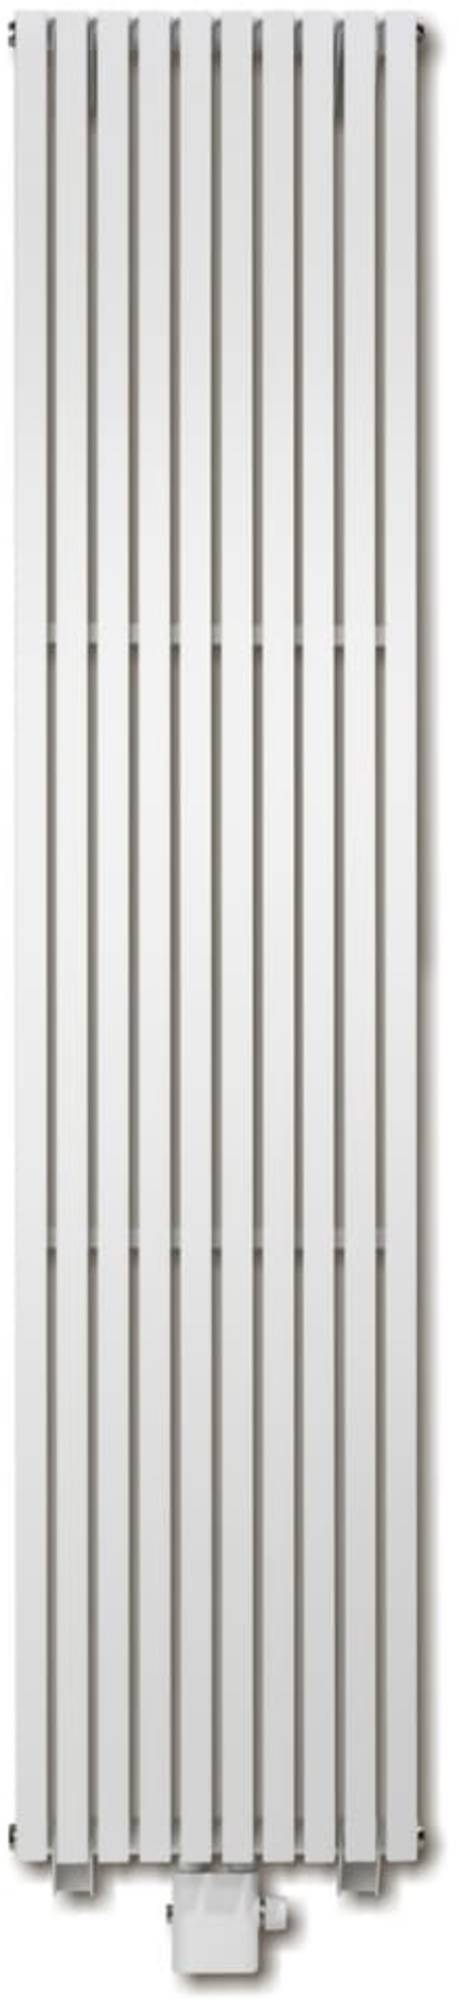 Vasco Vertiline CA radiator 550x1800 mm n14 as=0099 1368w